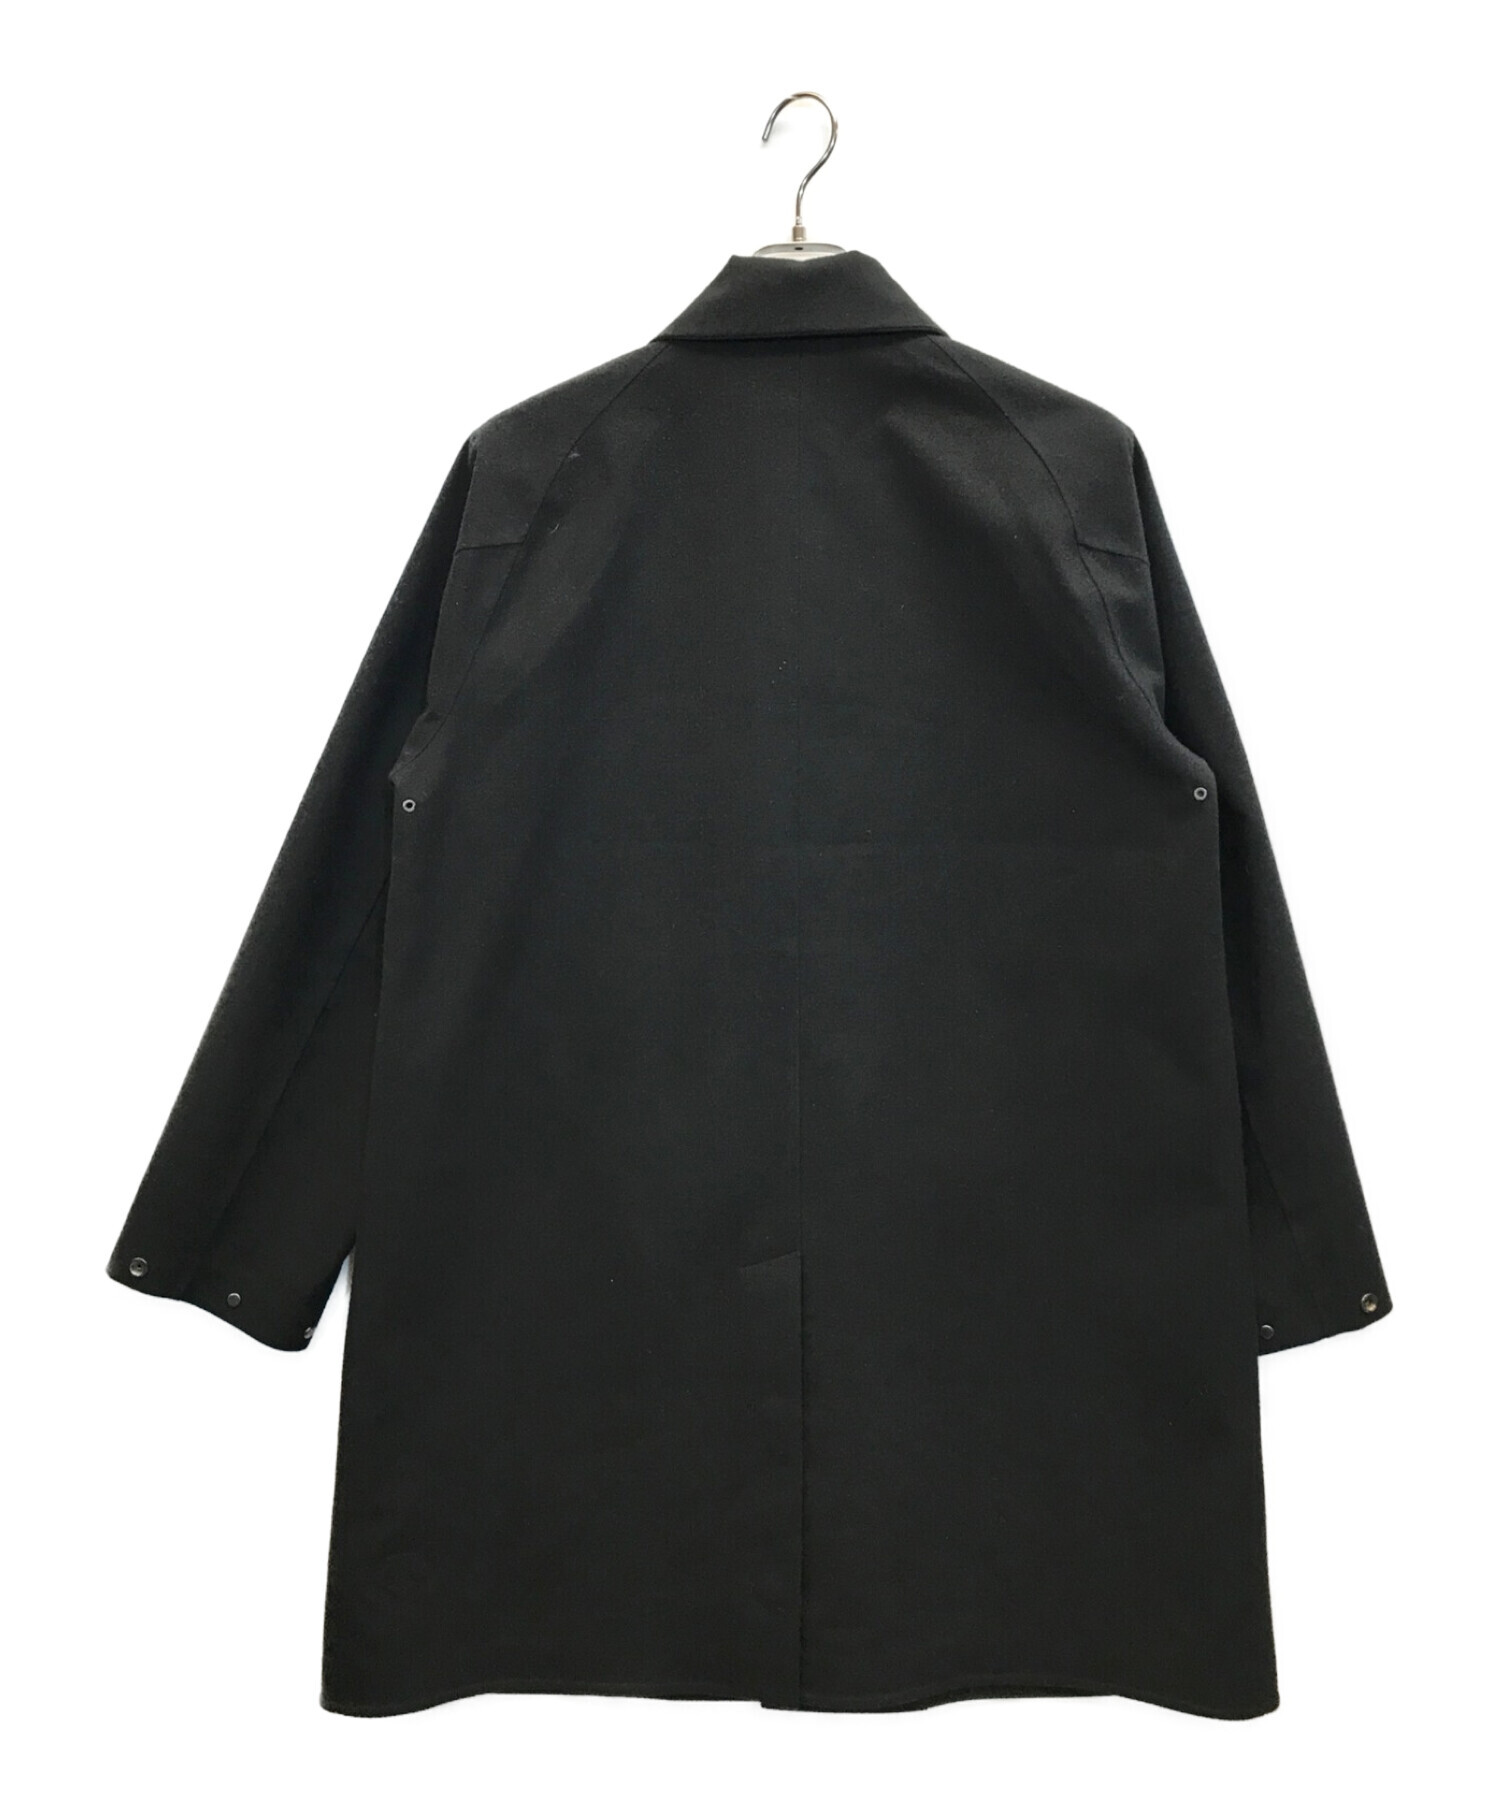 DESCENTE PAUSE (デサントポーズ) WOOL MIX SOUTIEN COLLAR COAT ウールミックスステンカラーコート ブラック  サイズ:M